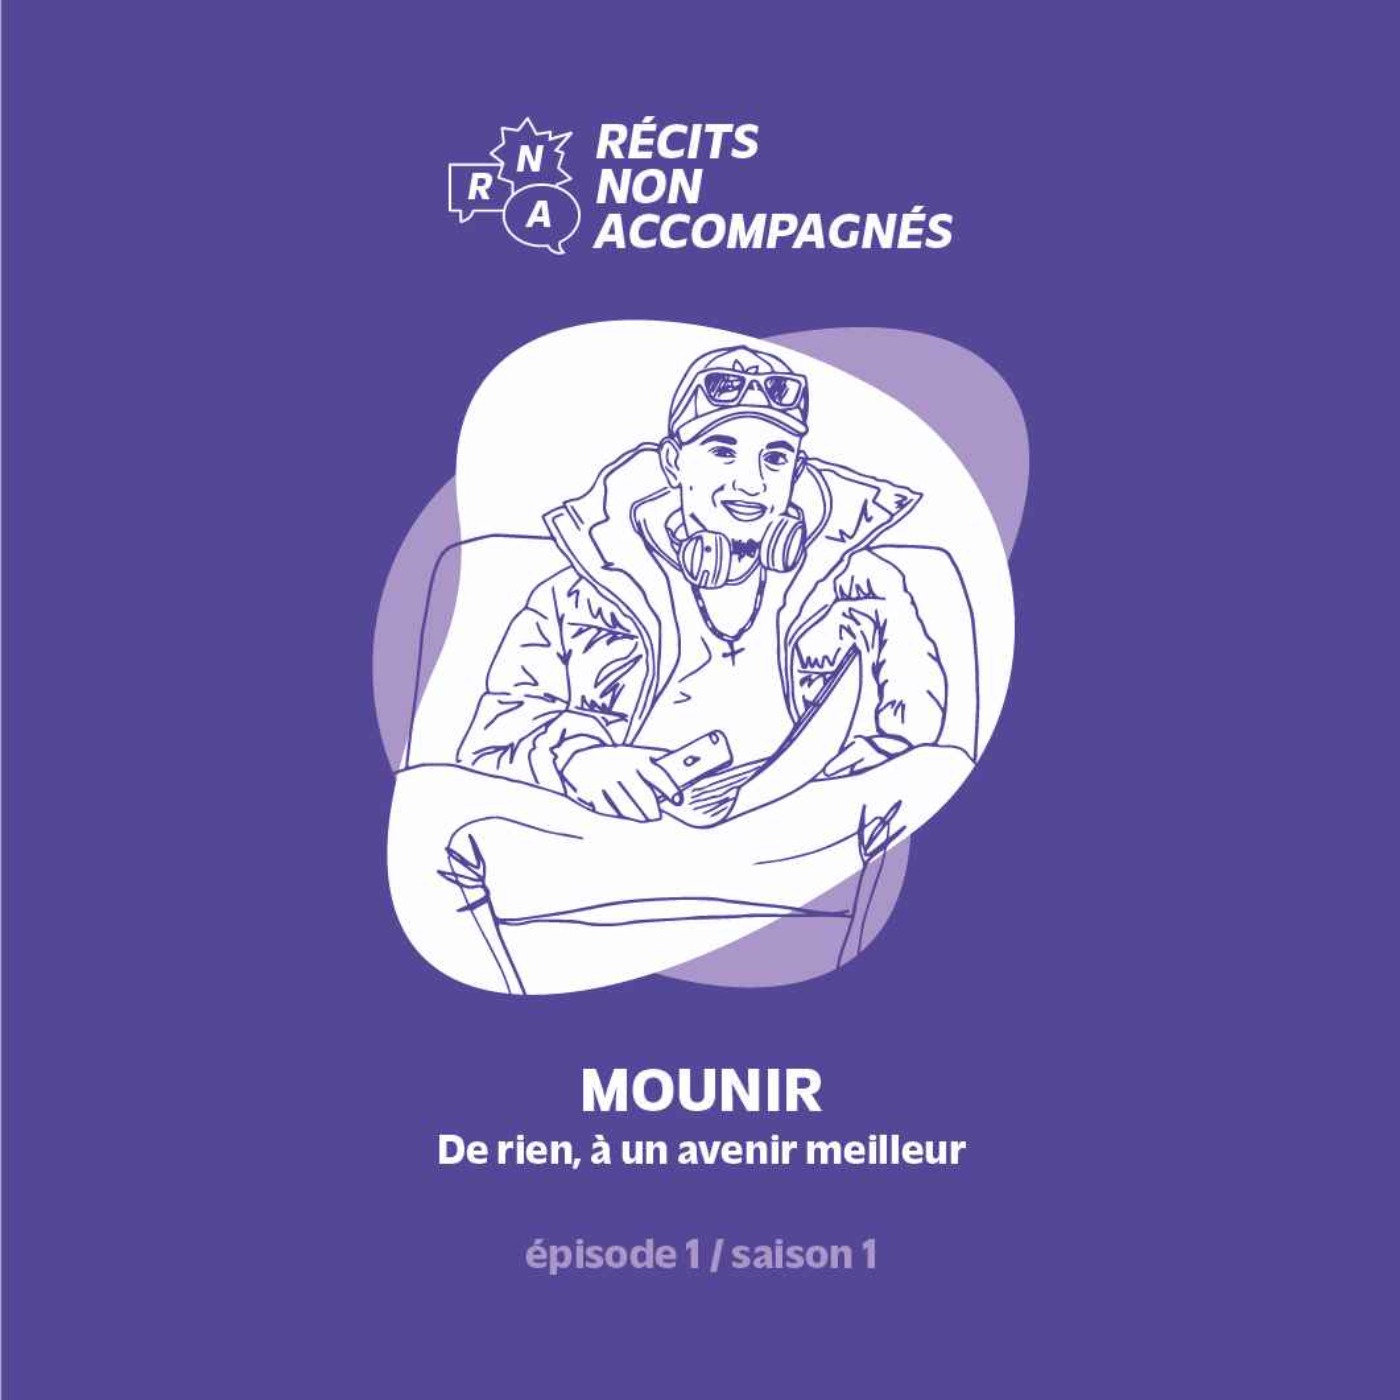 Ep.1 / Mounir - "De rien, à un avenir meilleur"